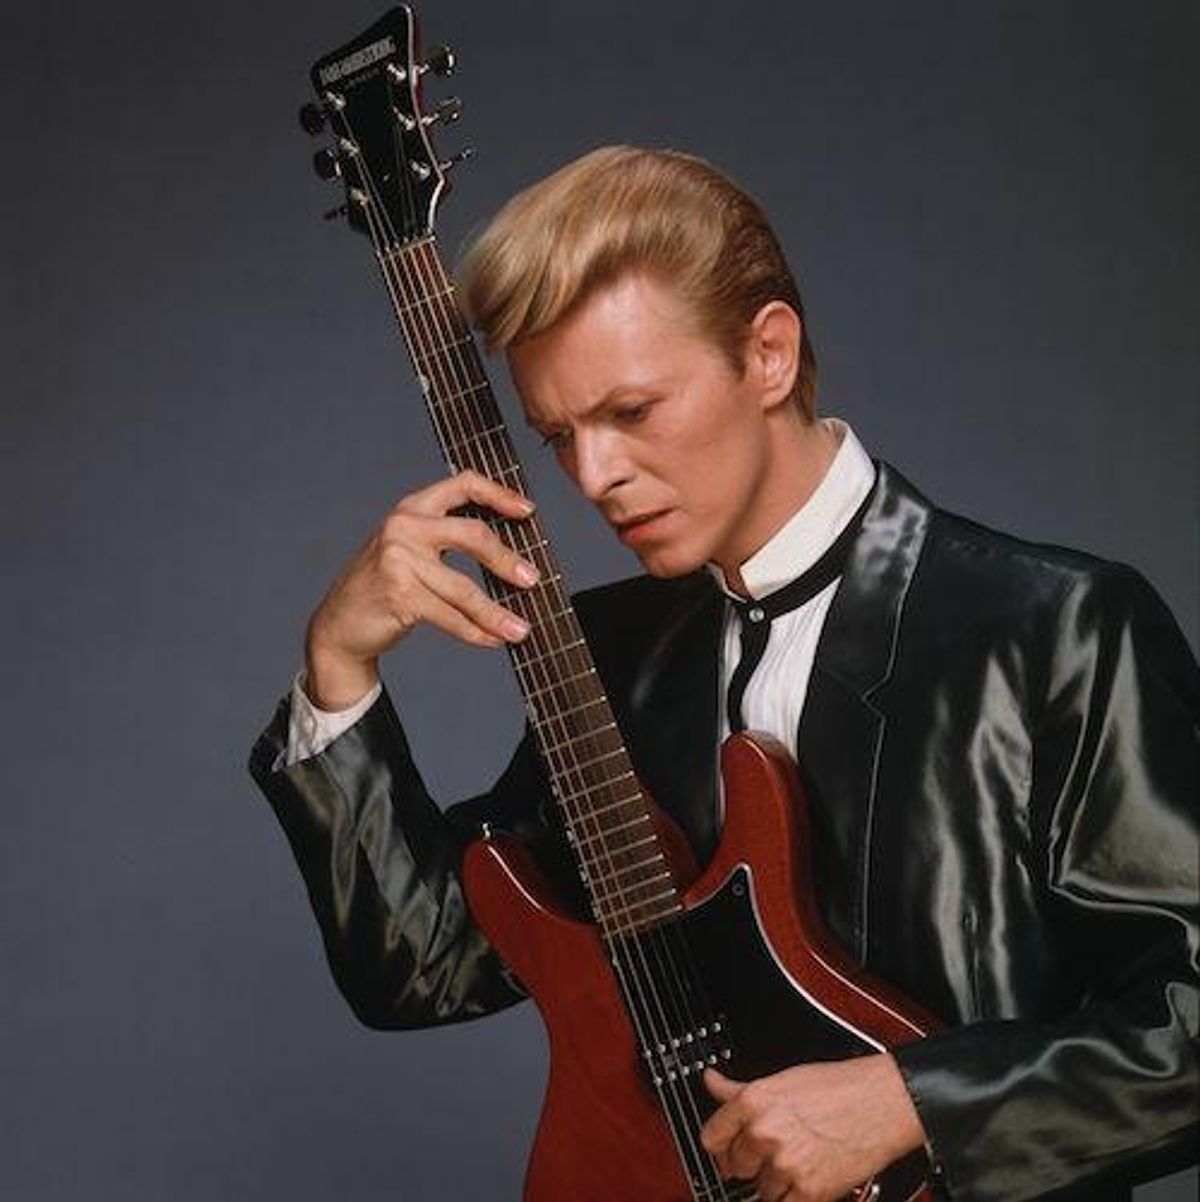 David Bowie is exhibit Brooklyn Museum